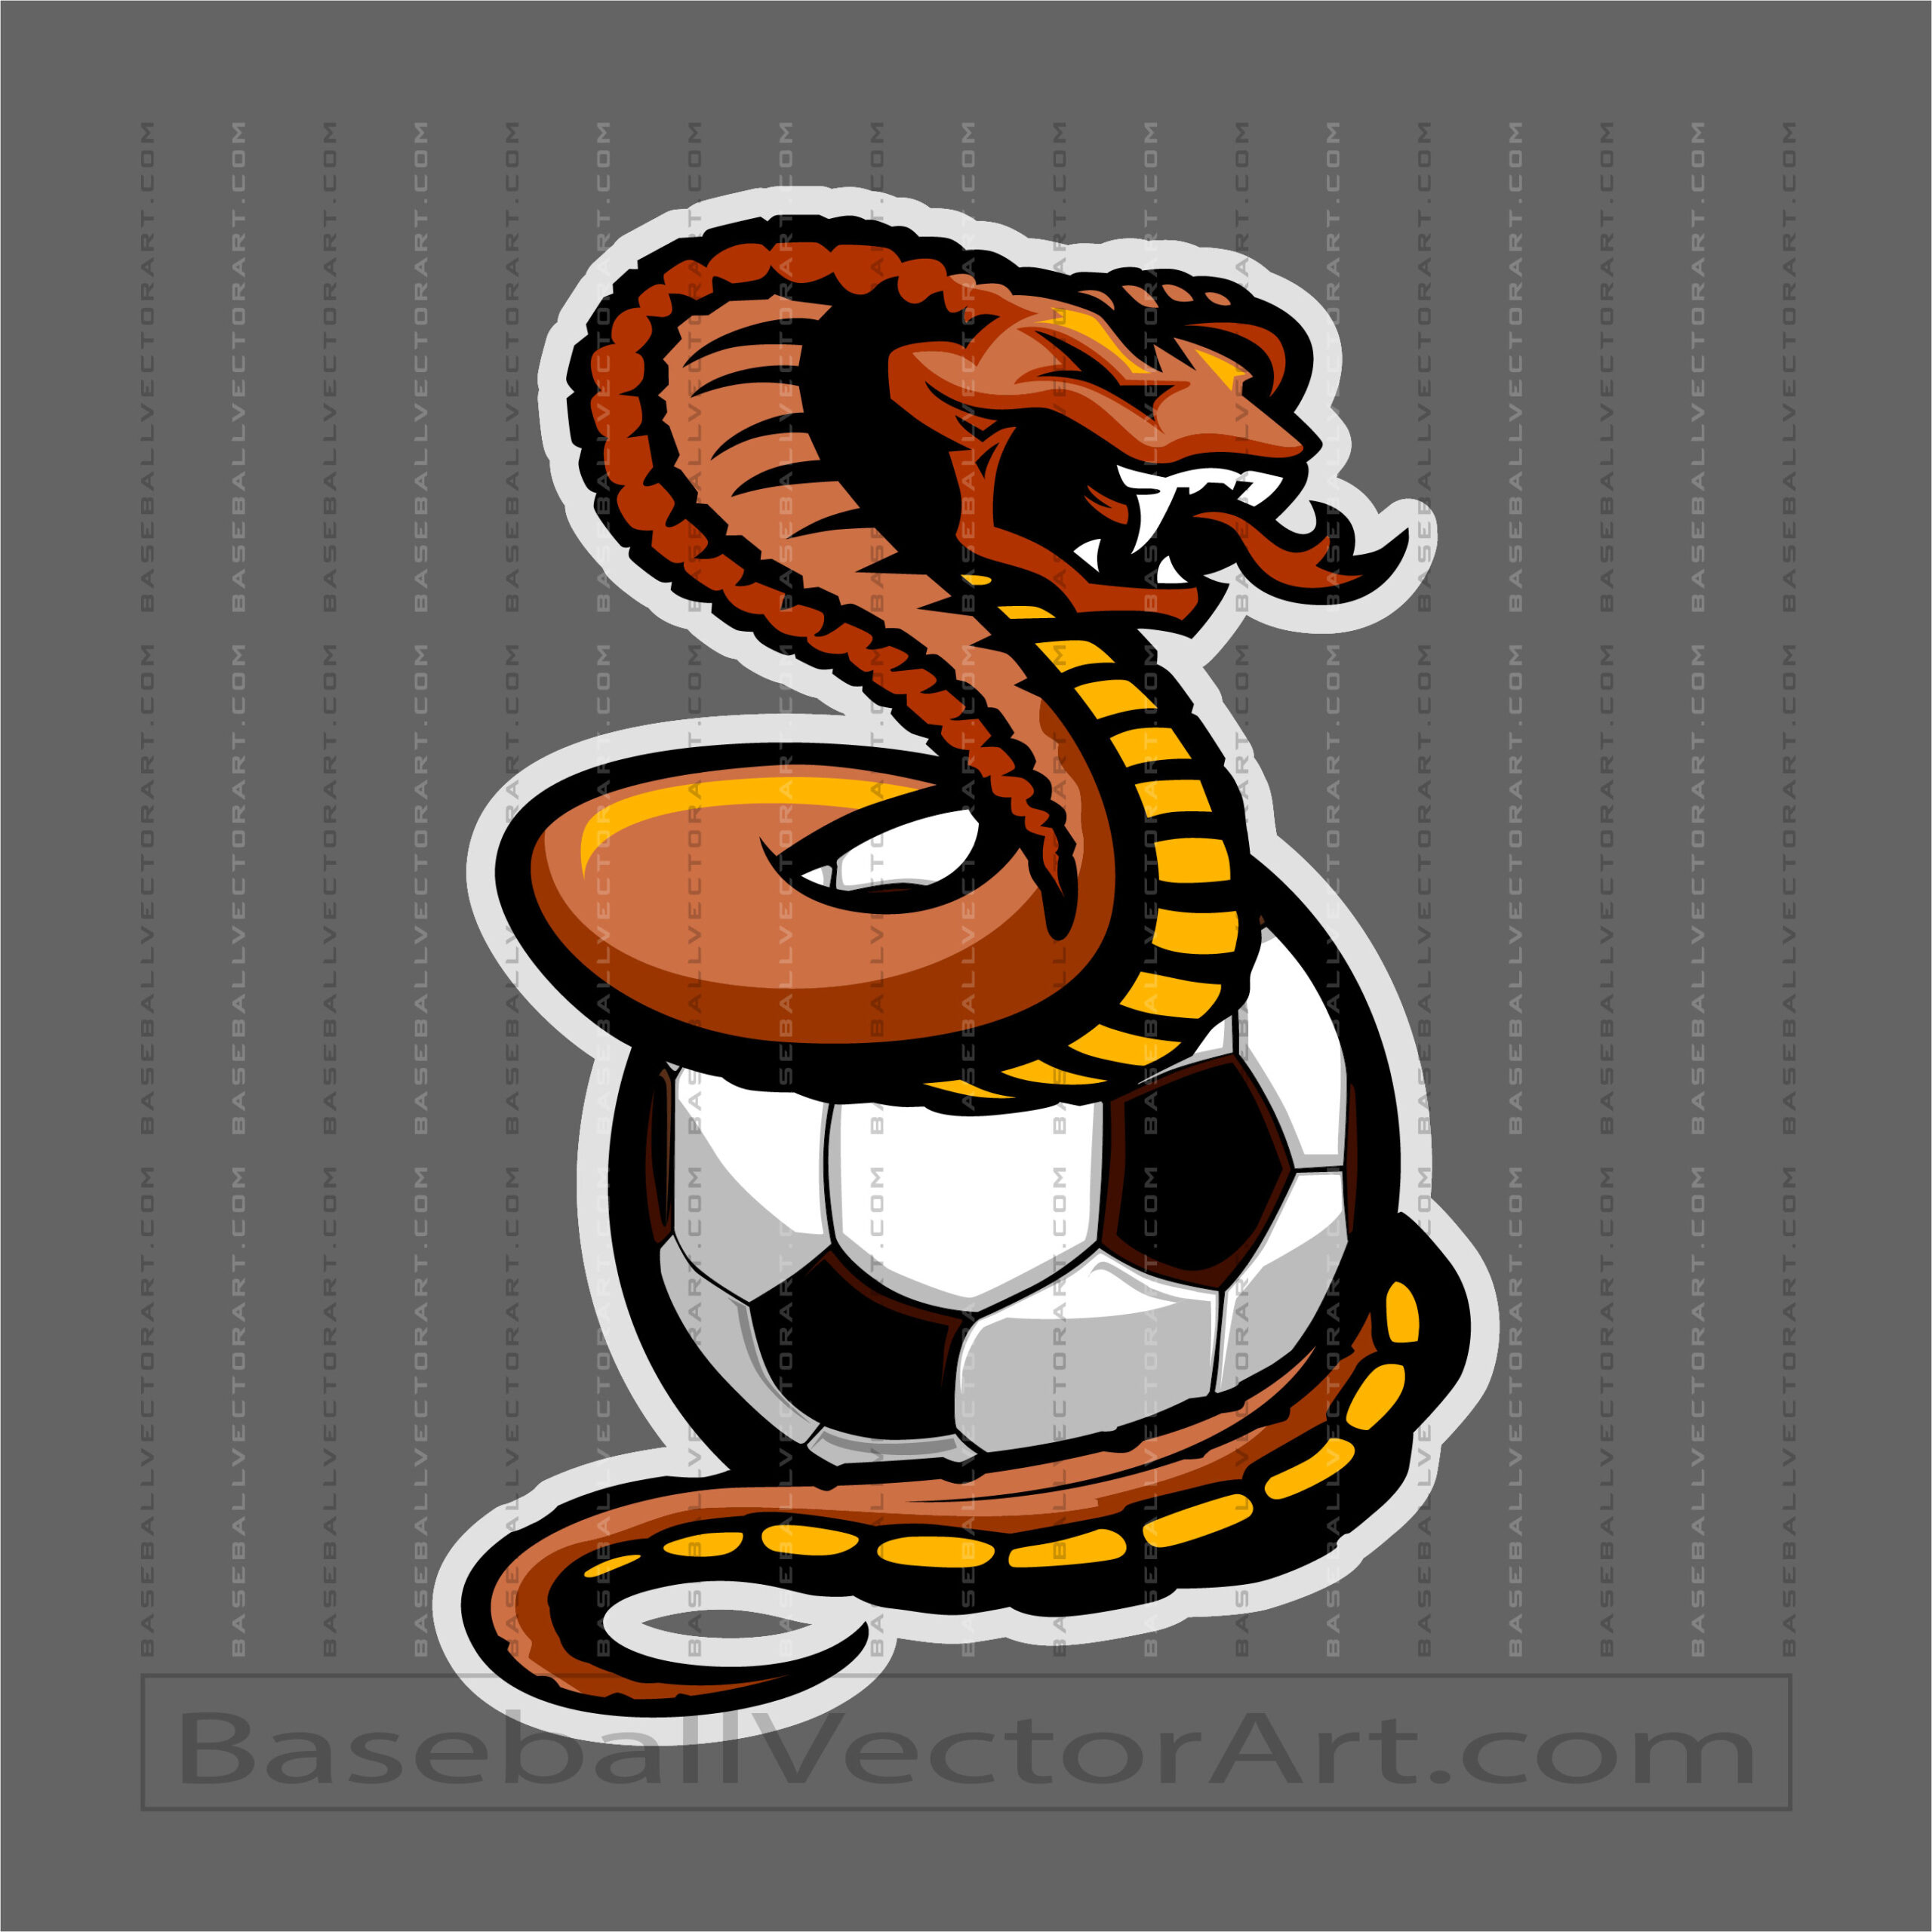 Cobras Soccer Logo